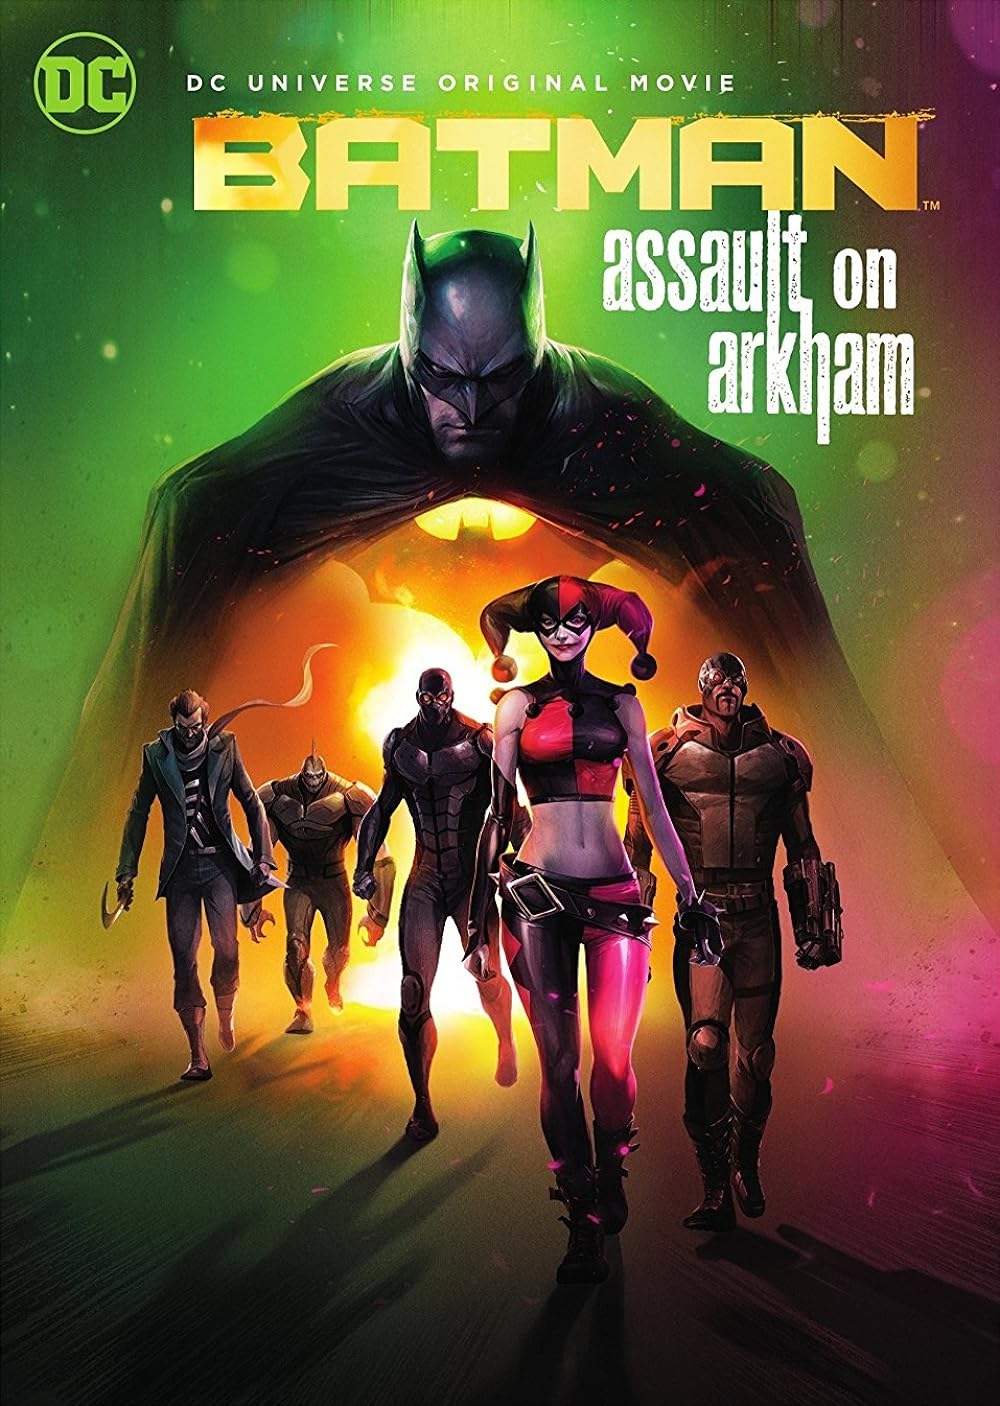 FULL MOVIE: Batman: Assault of Arkham (2014)